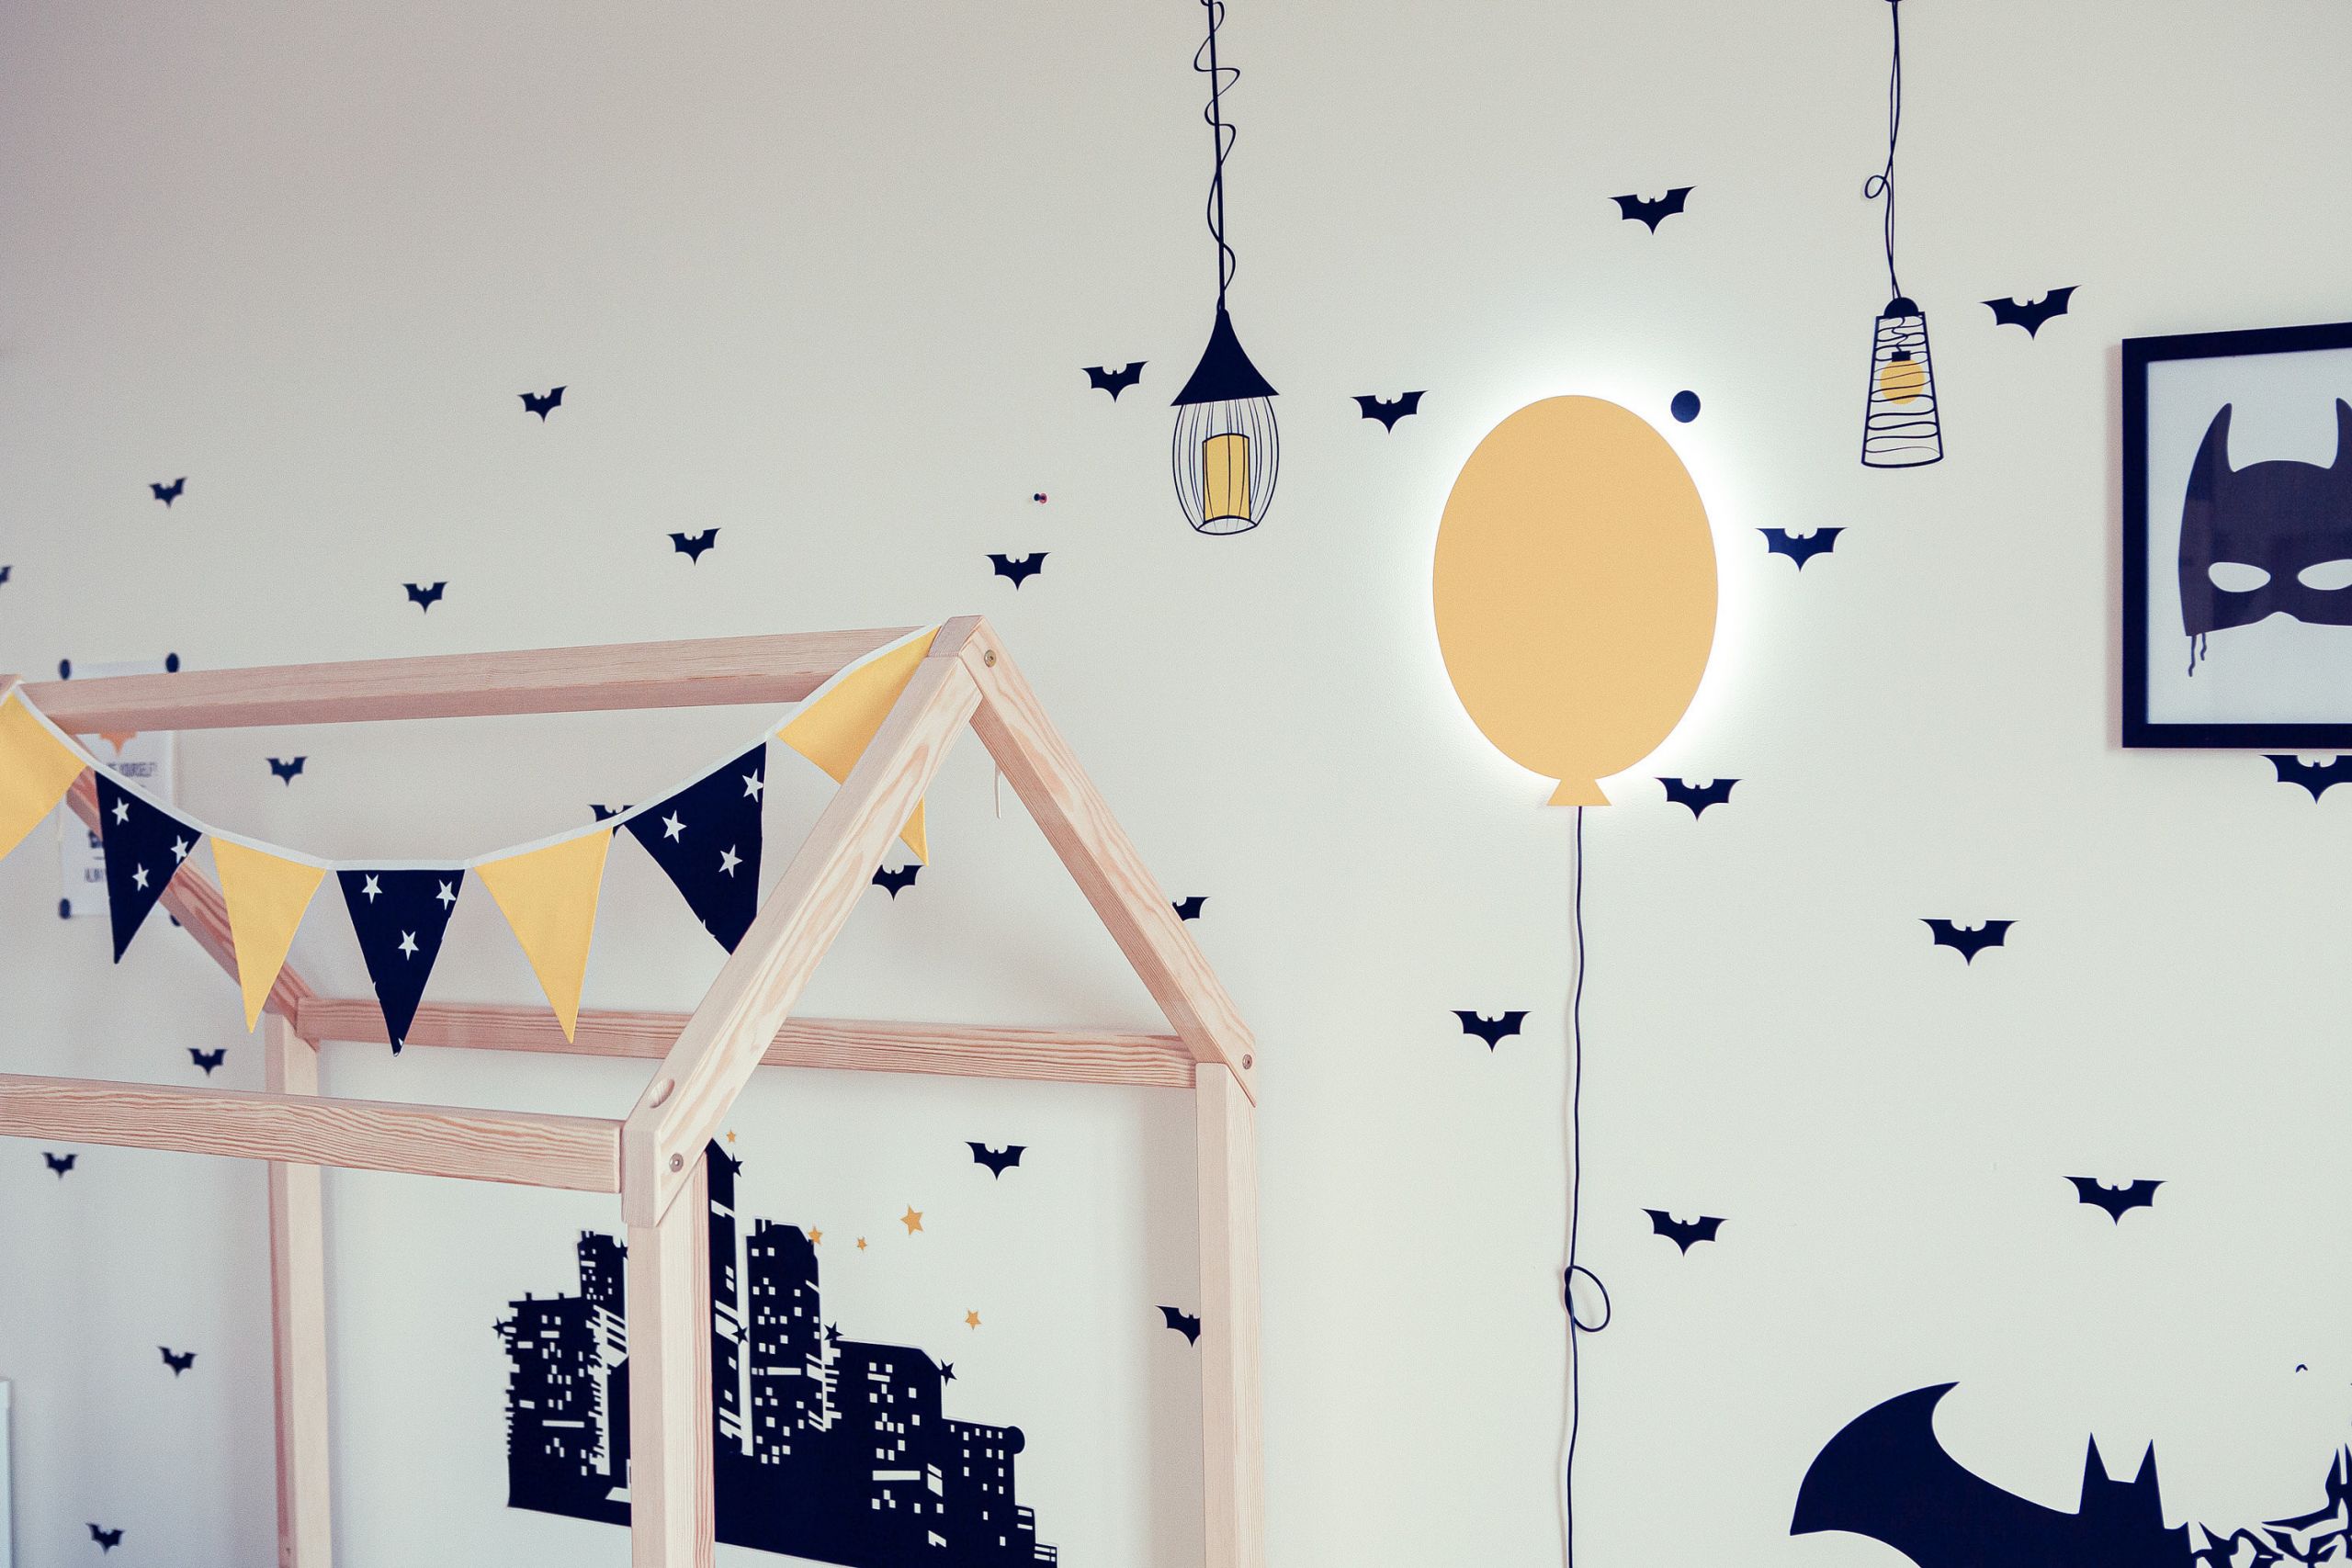 Lamp Shades For Kids Room
 Baloon lamp for children bedroom lamp shade kids room